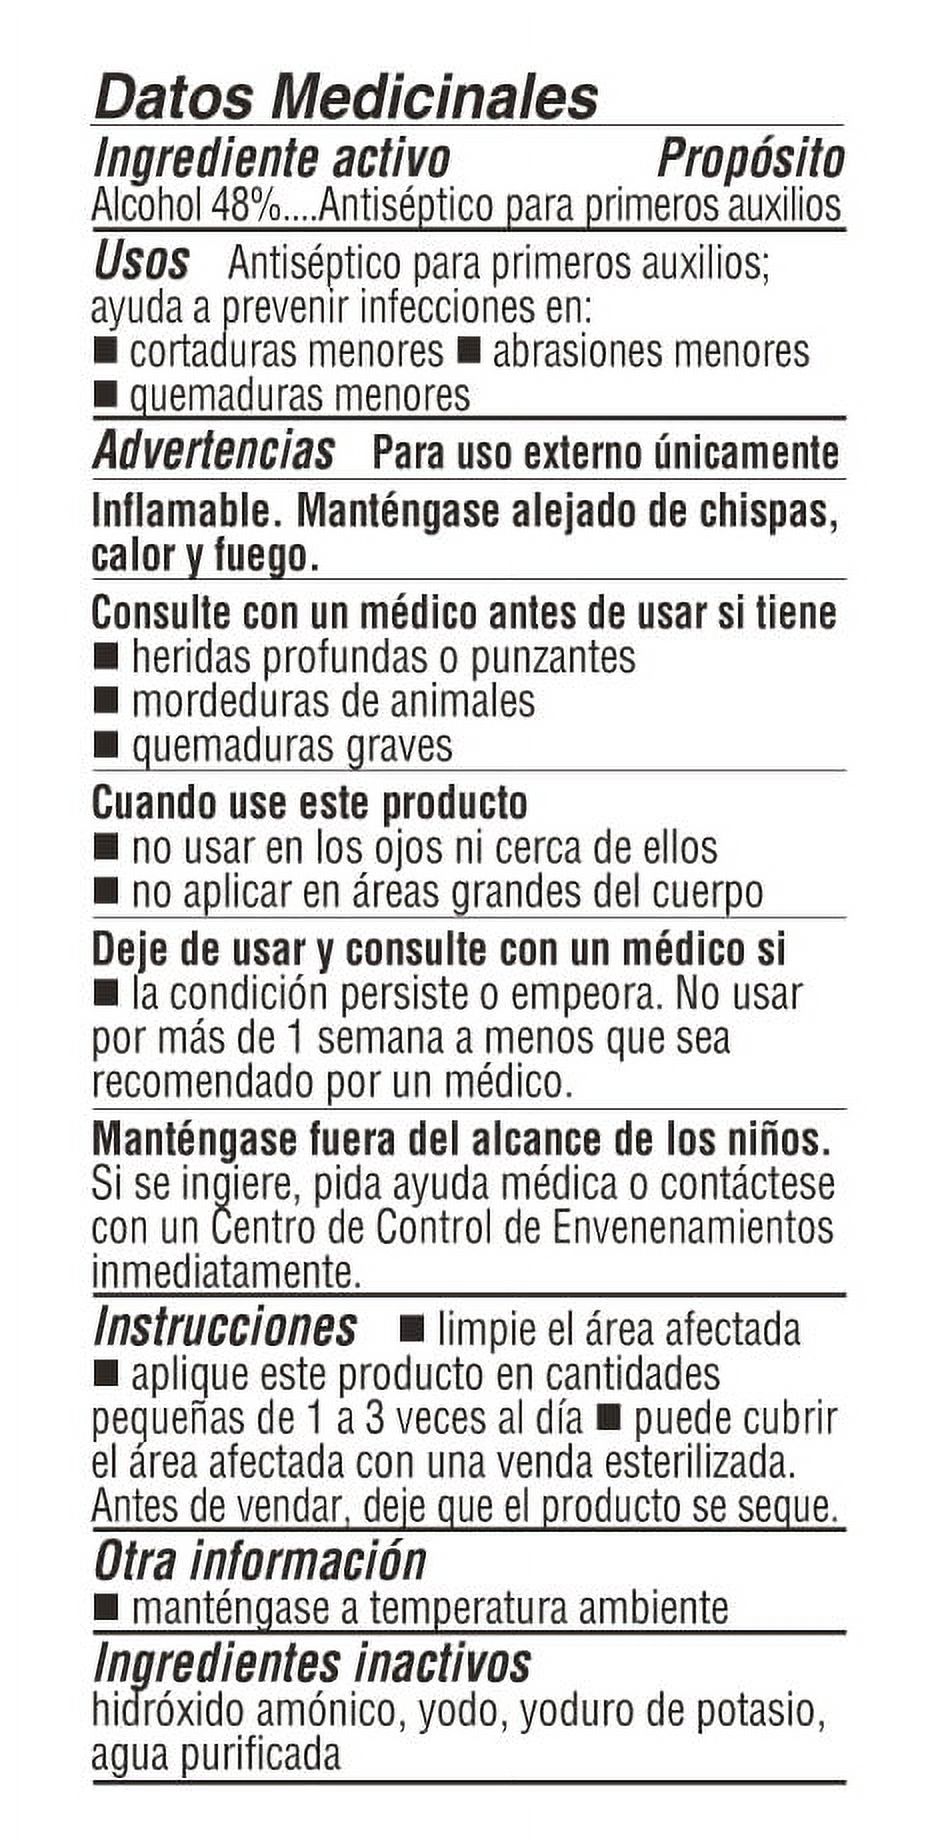 De La Cruz Decolorized Iodine First Aid Antiseptic 1 fl Oz (30 mL), 2 Pack - image 3 of 11